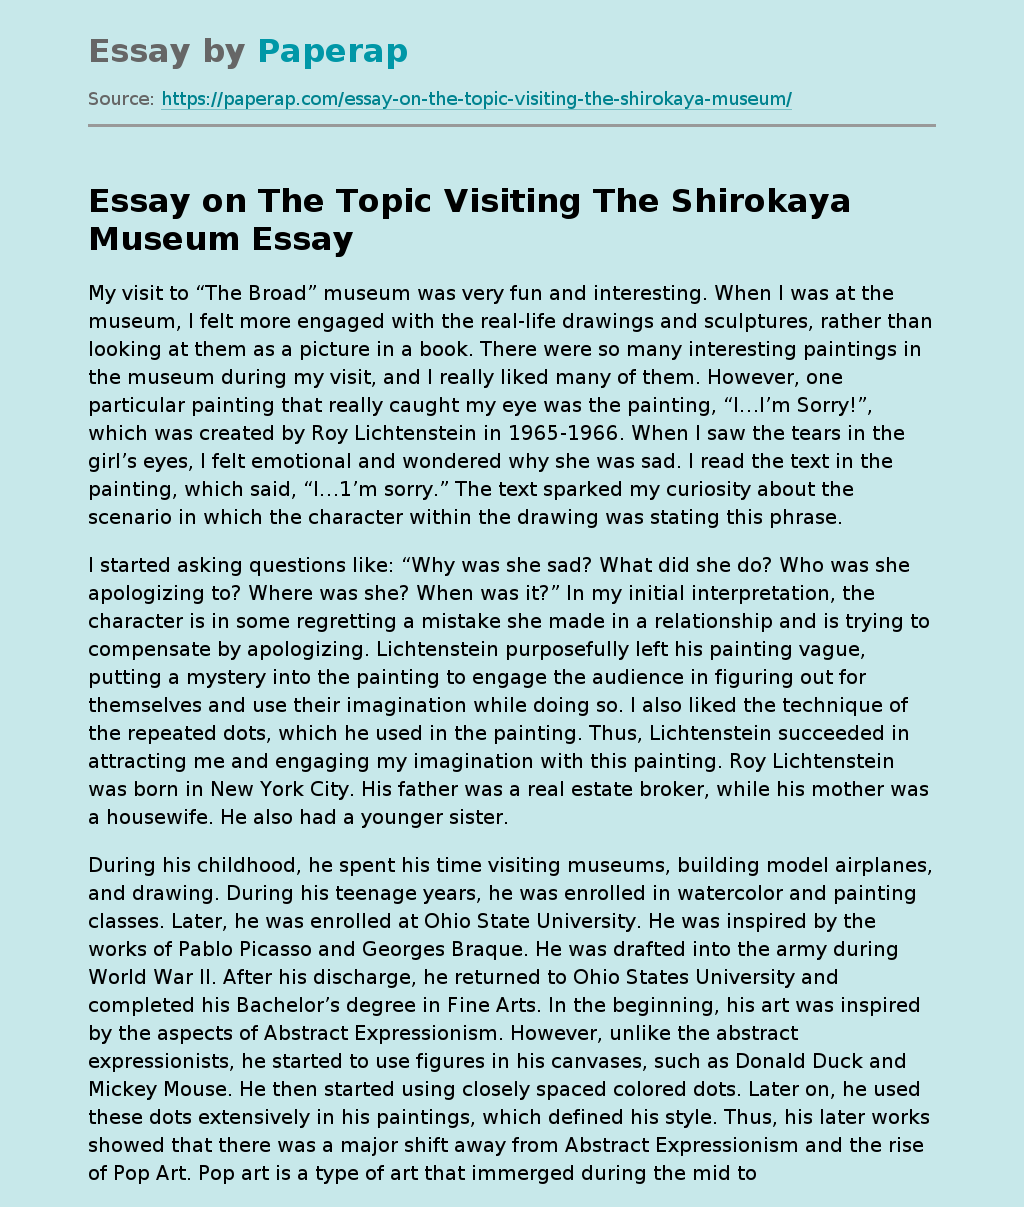 Essay on The Topic Visiting The Shirokaya Museum